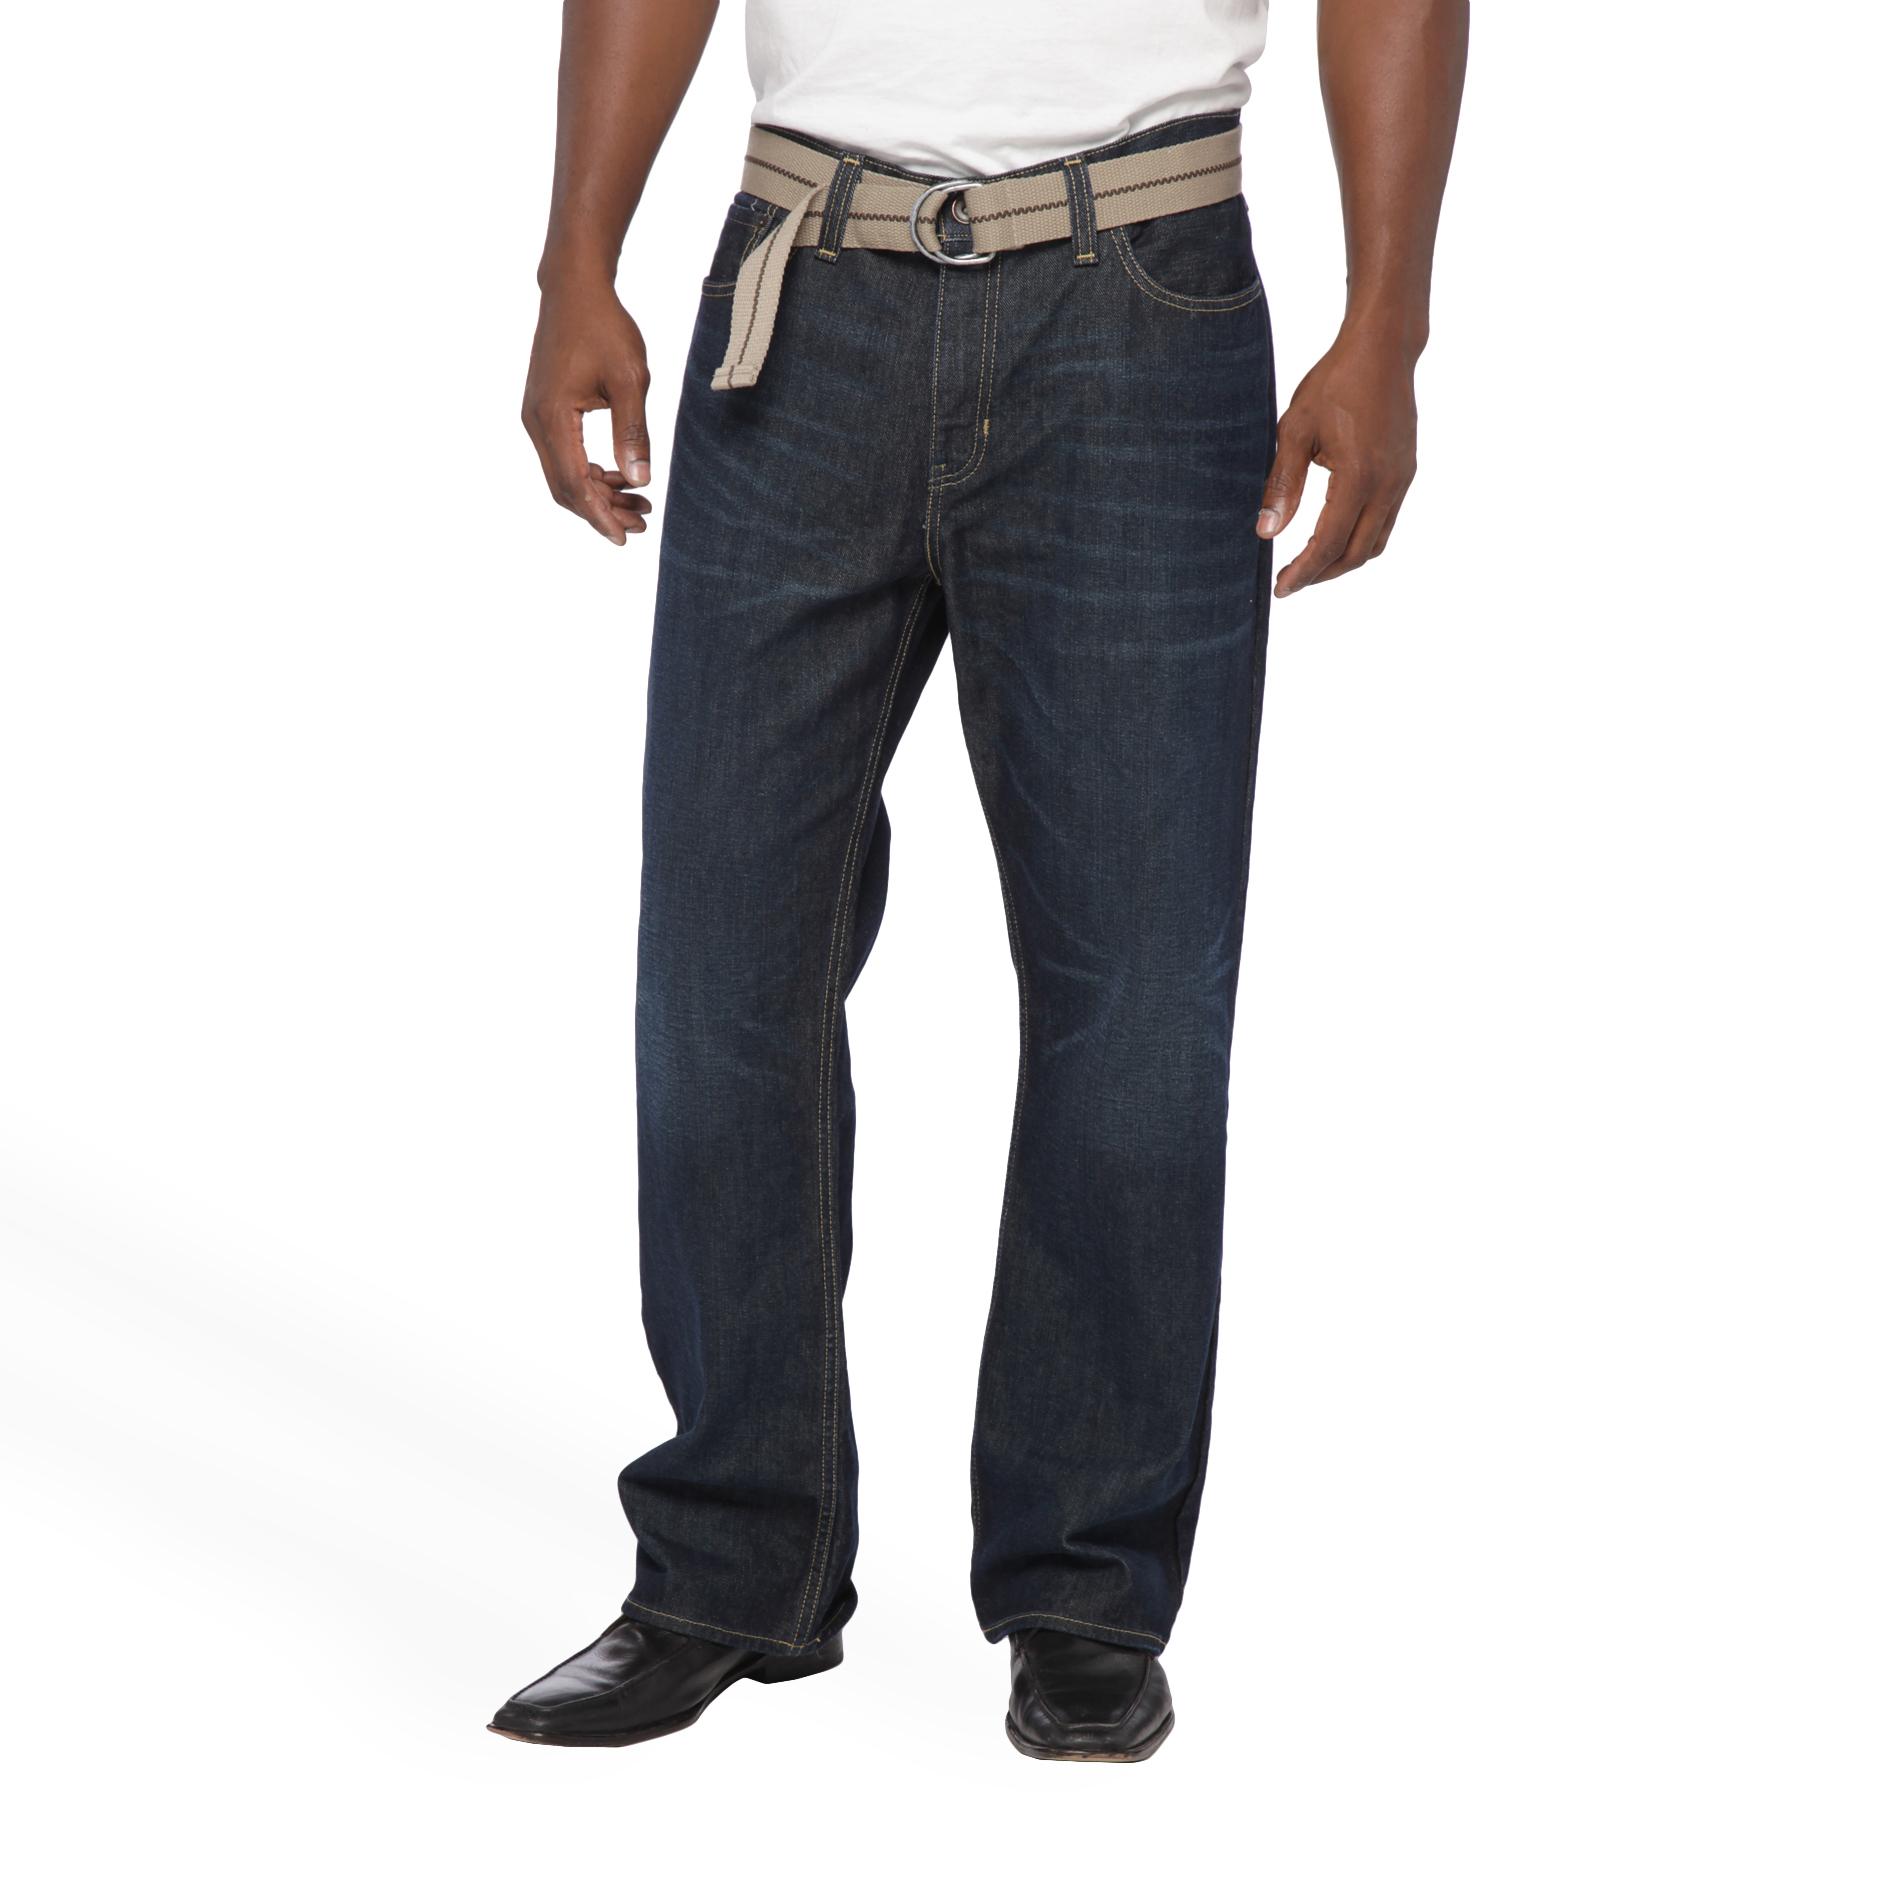 Roebuck & Co. Men's Slim Straight Belted Jeans